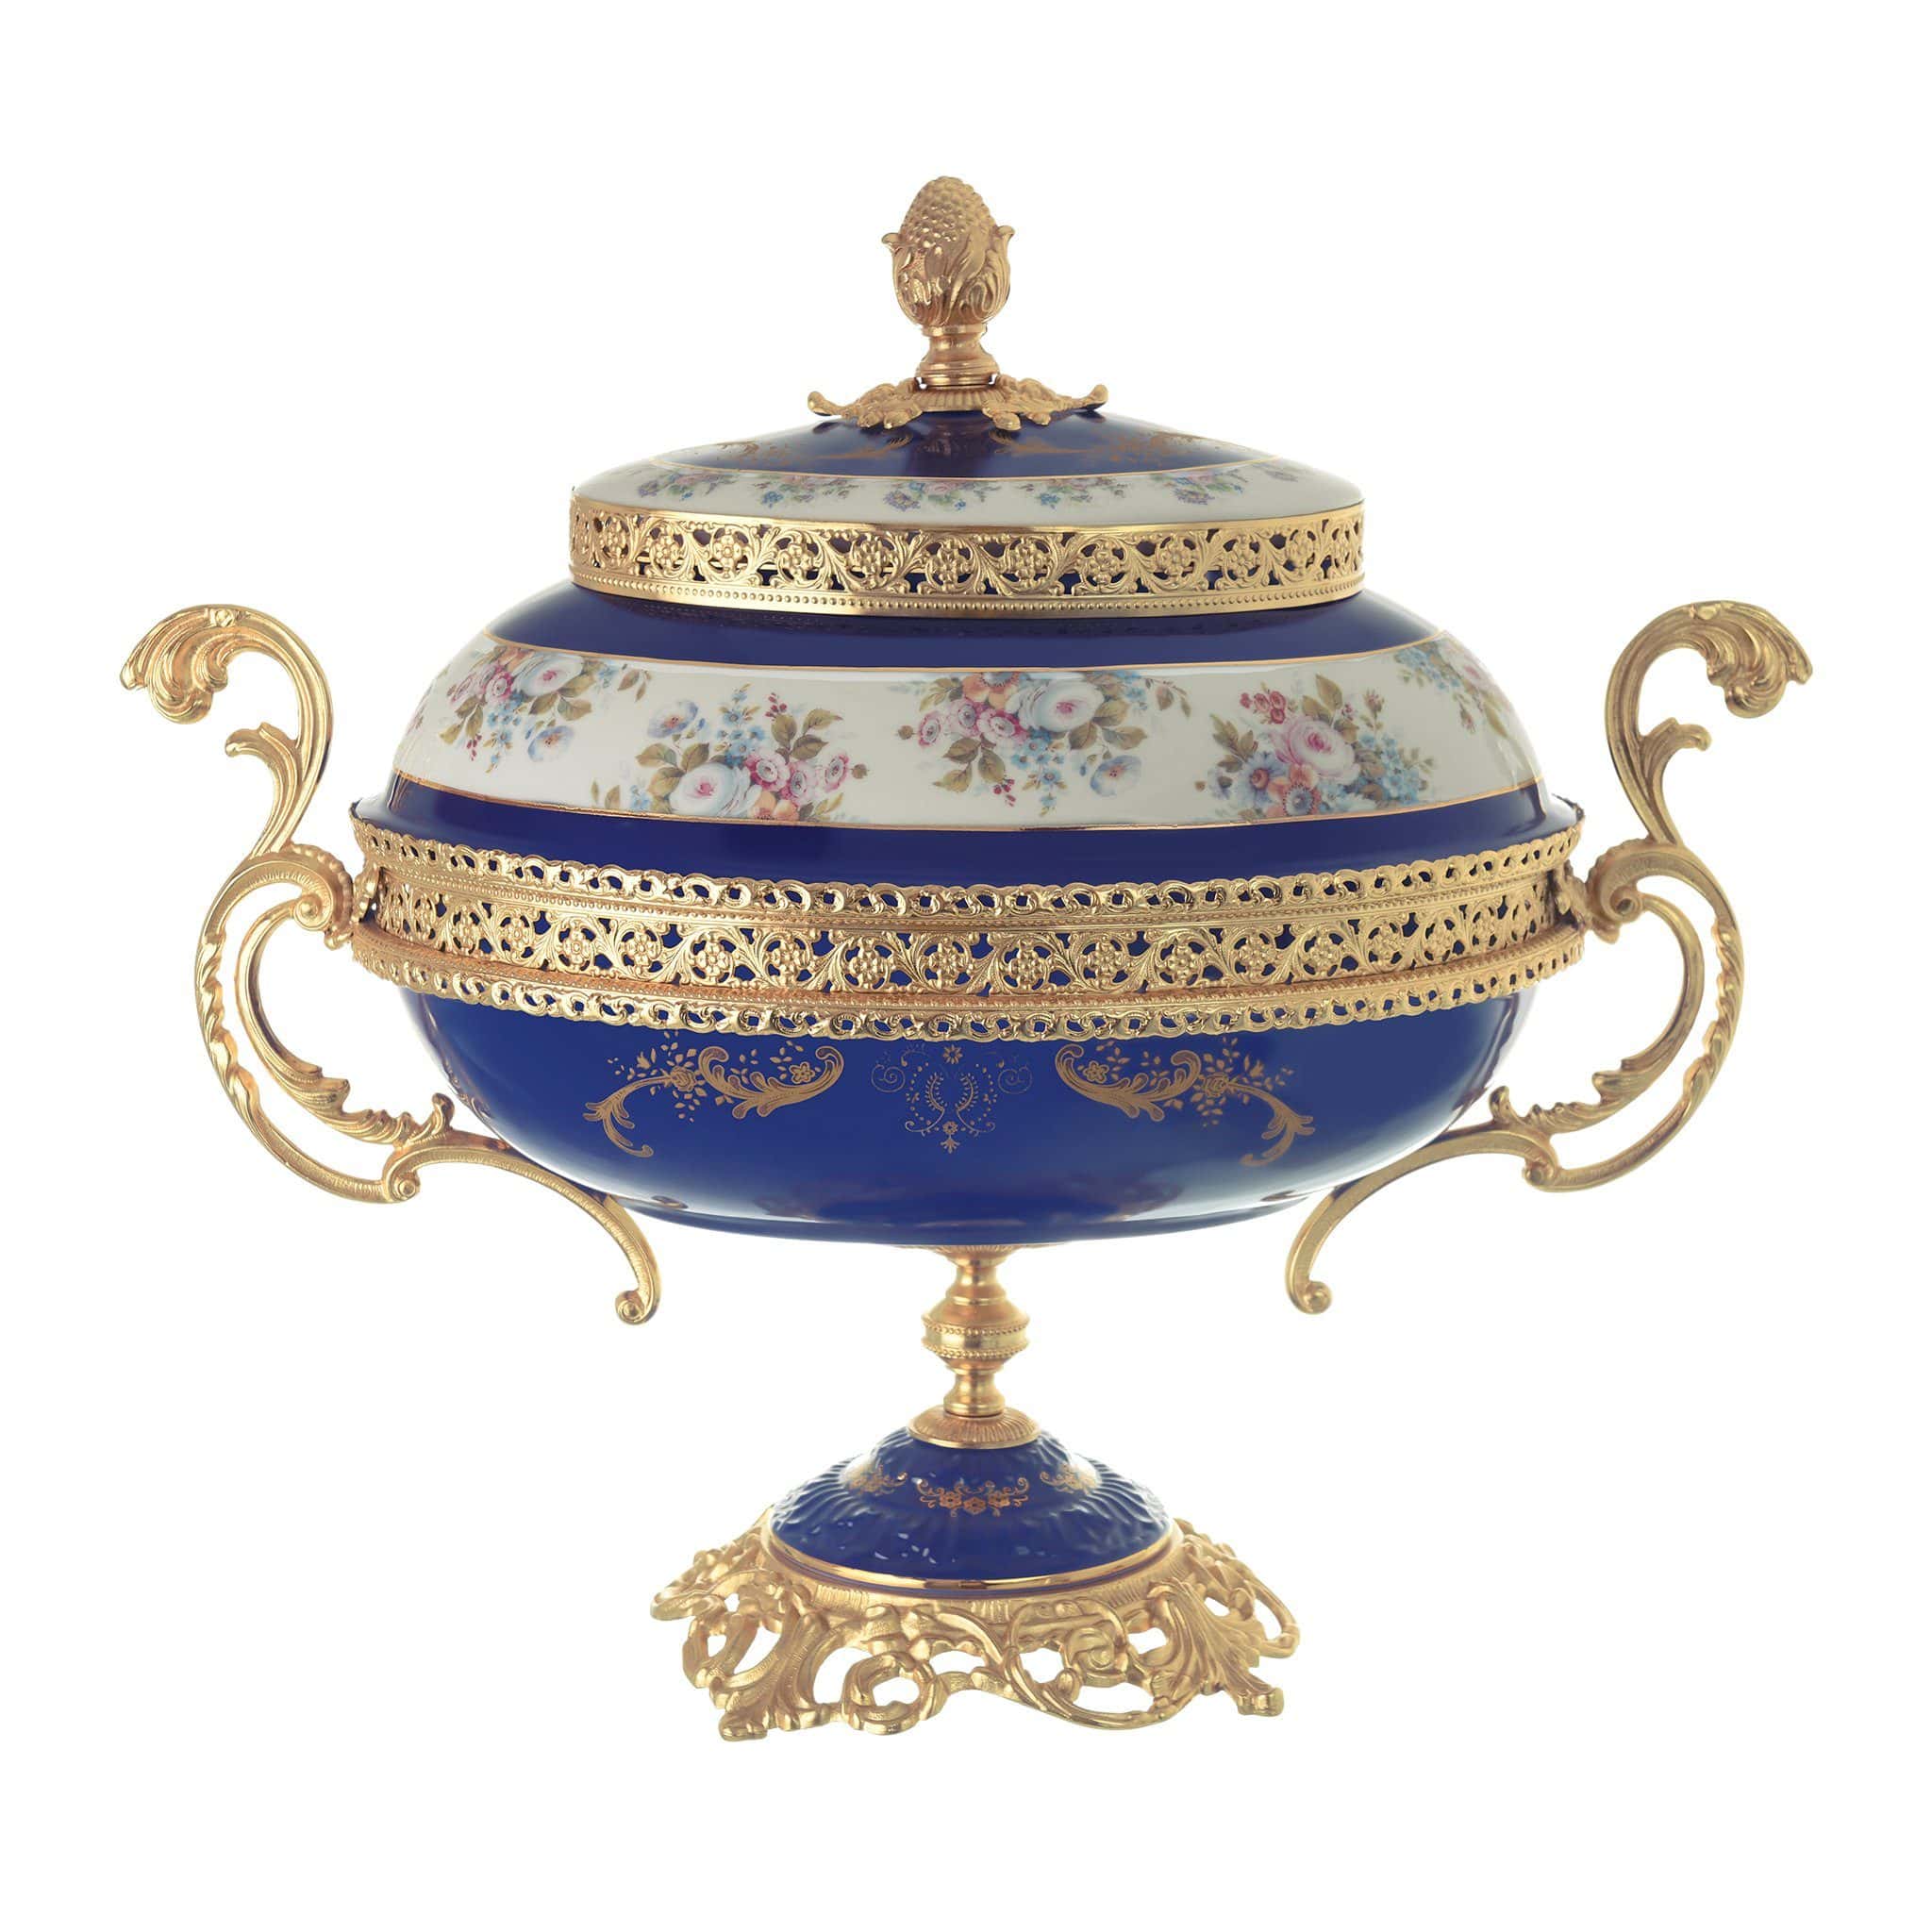 Caroline - Oval Box with Base & Gold Plated Handles - Floral Design - Blue & Gold - 58000514